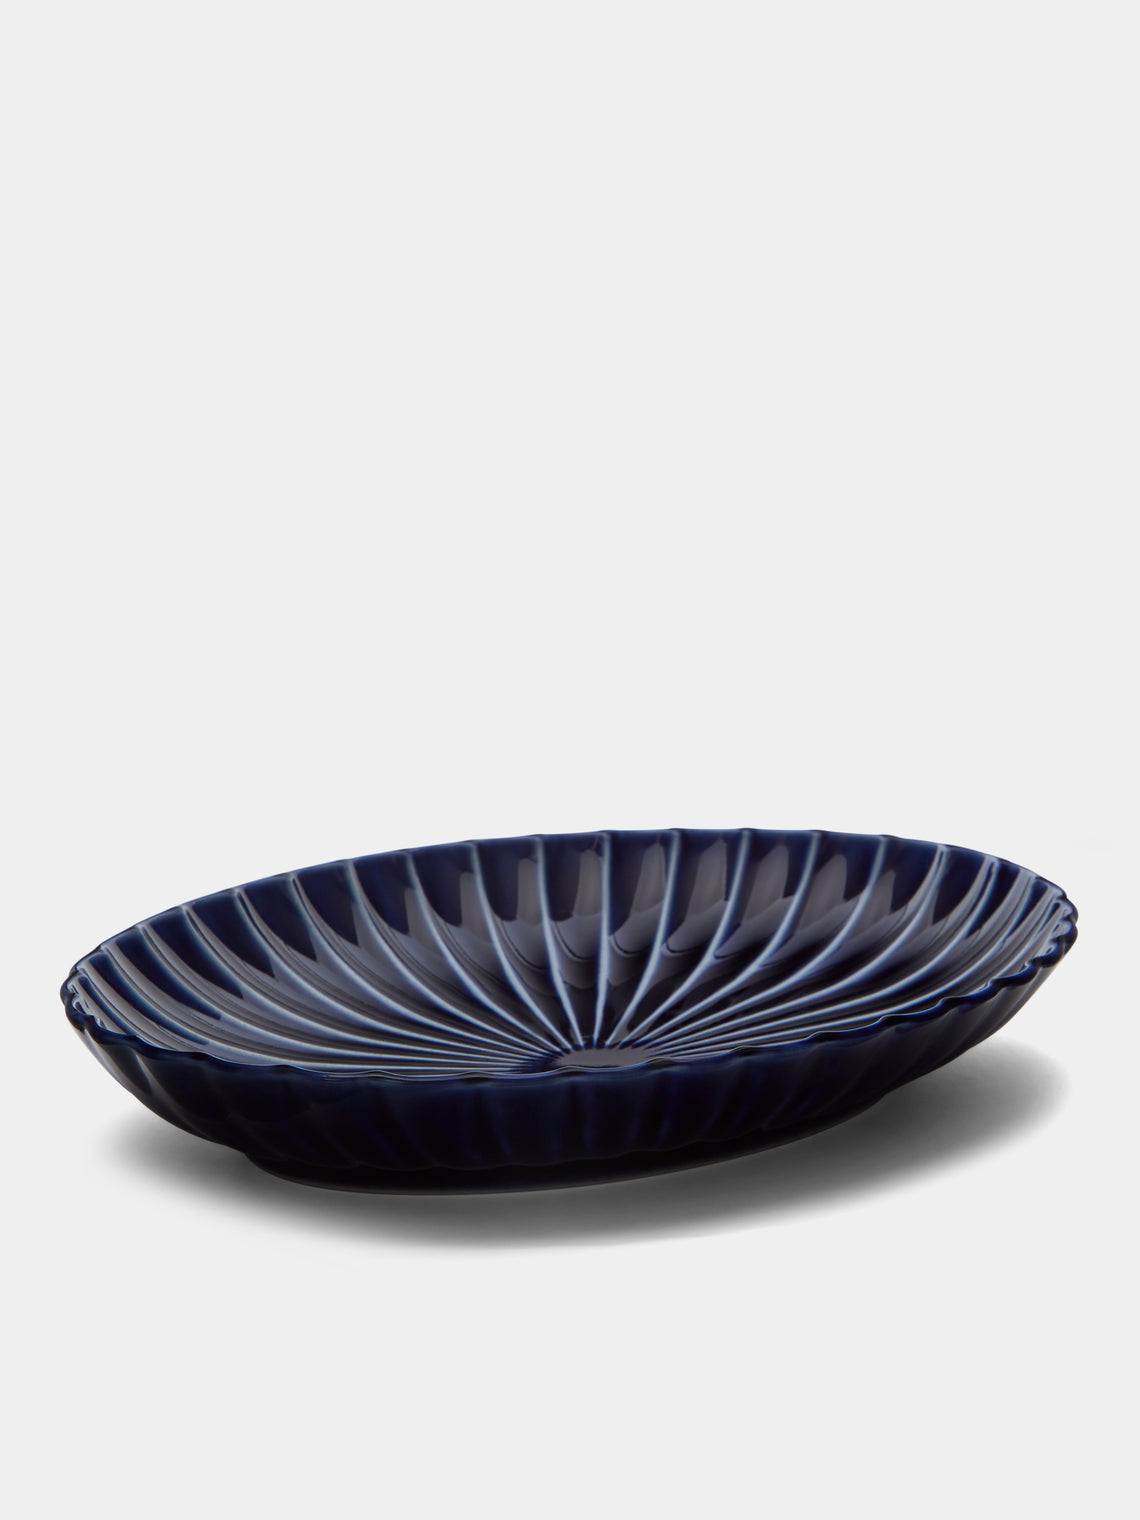 Kaneko Kohyo - Giyaman Urushi Ceramic Oval Platter - Blue - ABASK